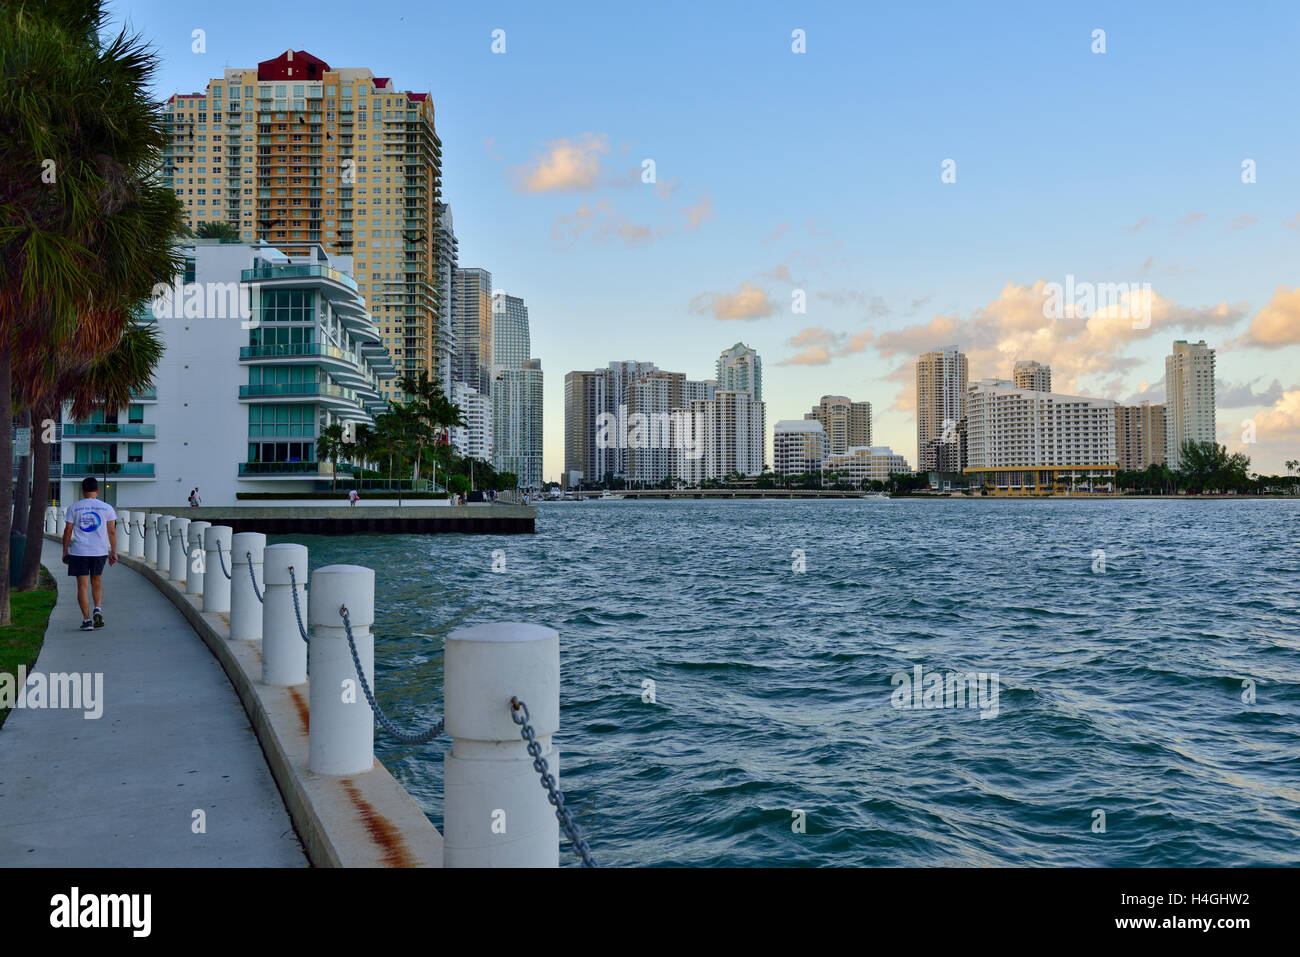 Skyline of Miami by Biscayne Bay, Florida, USA Stock Photo